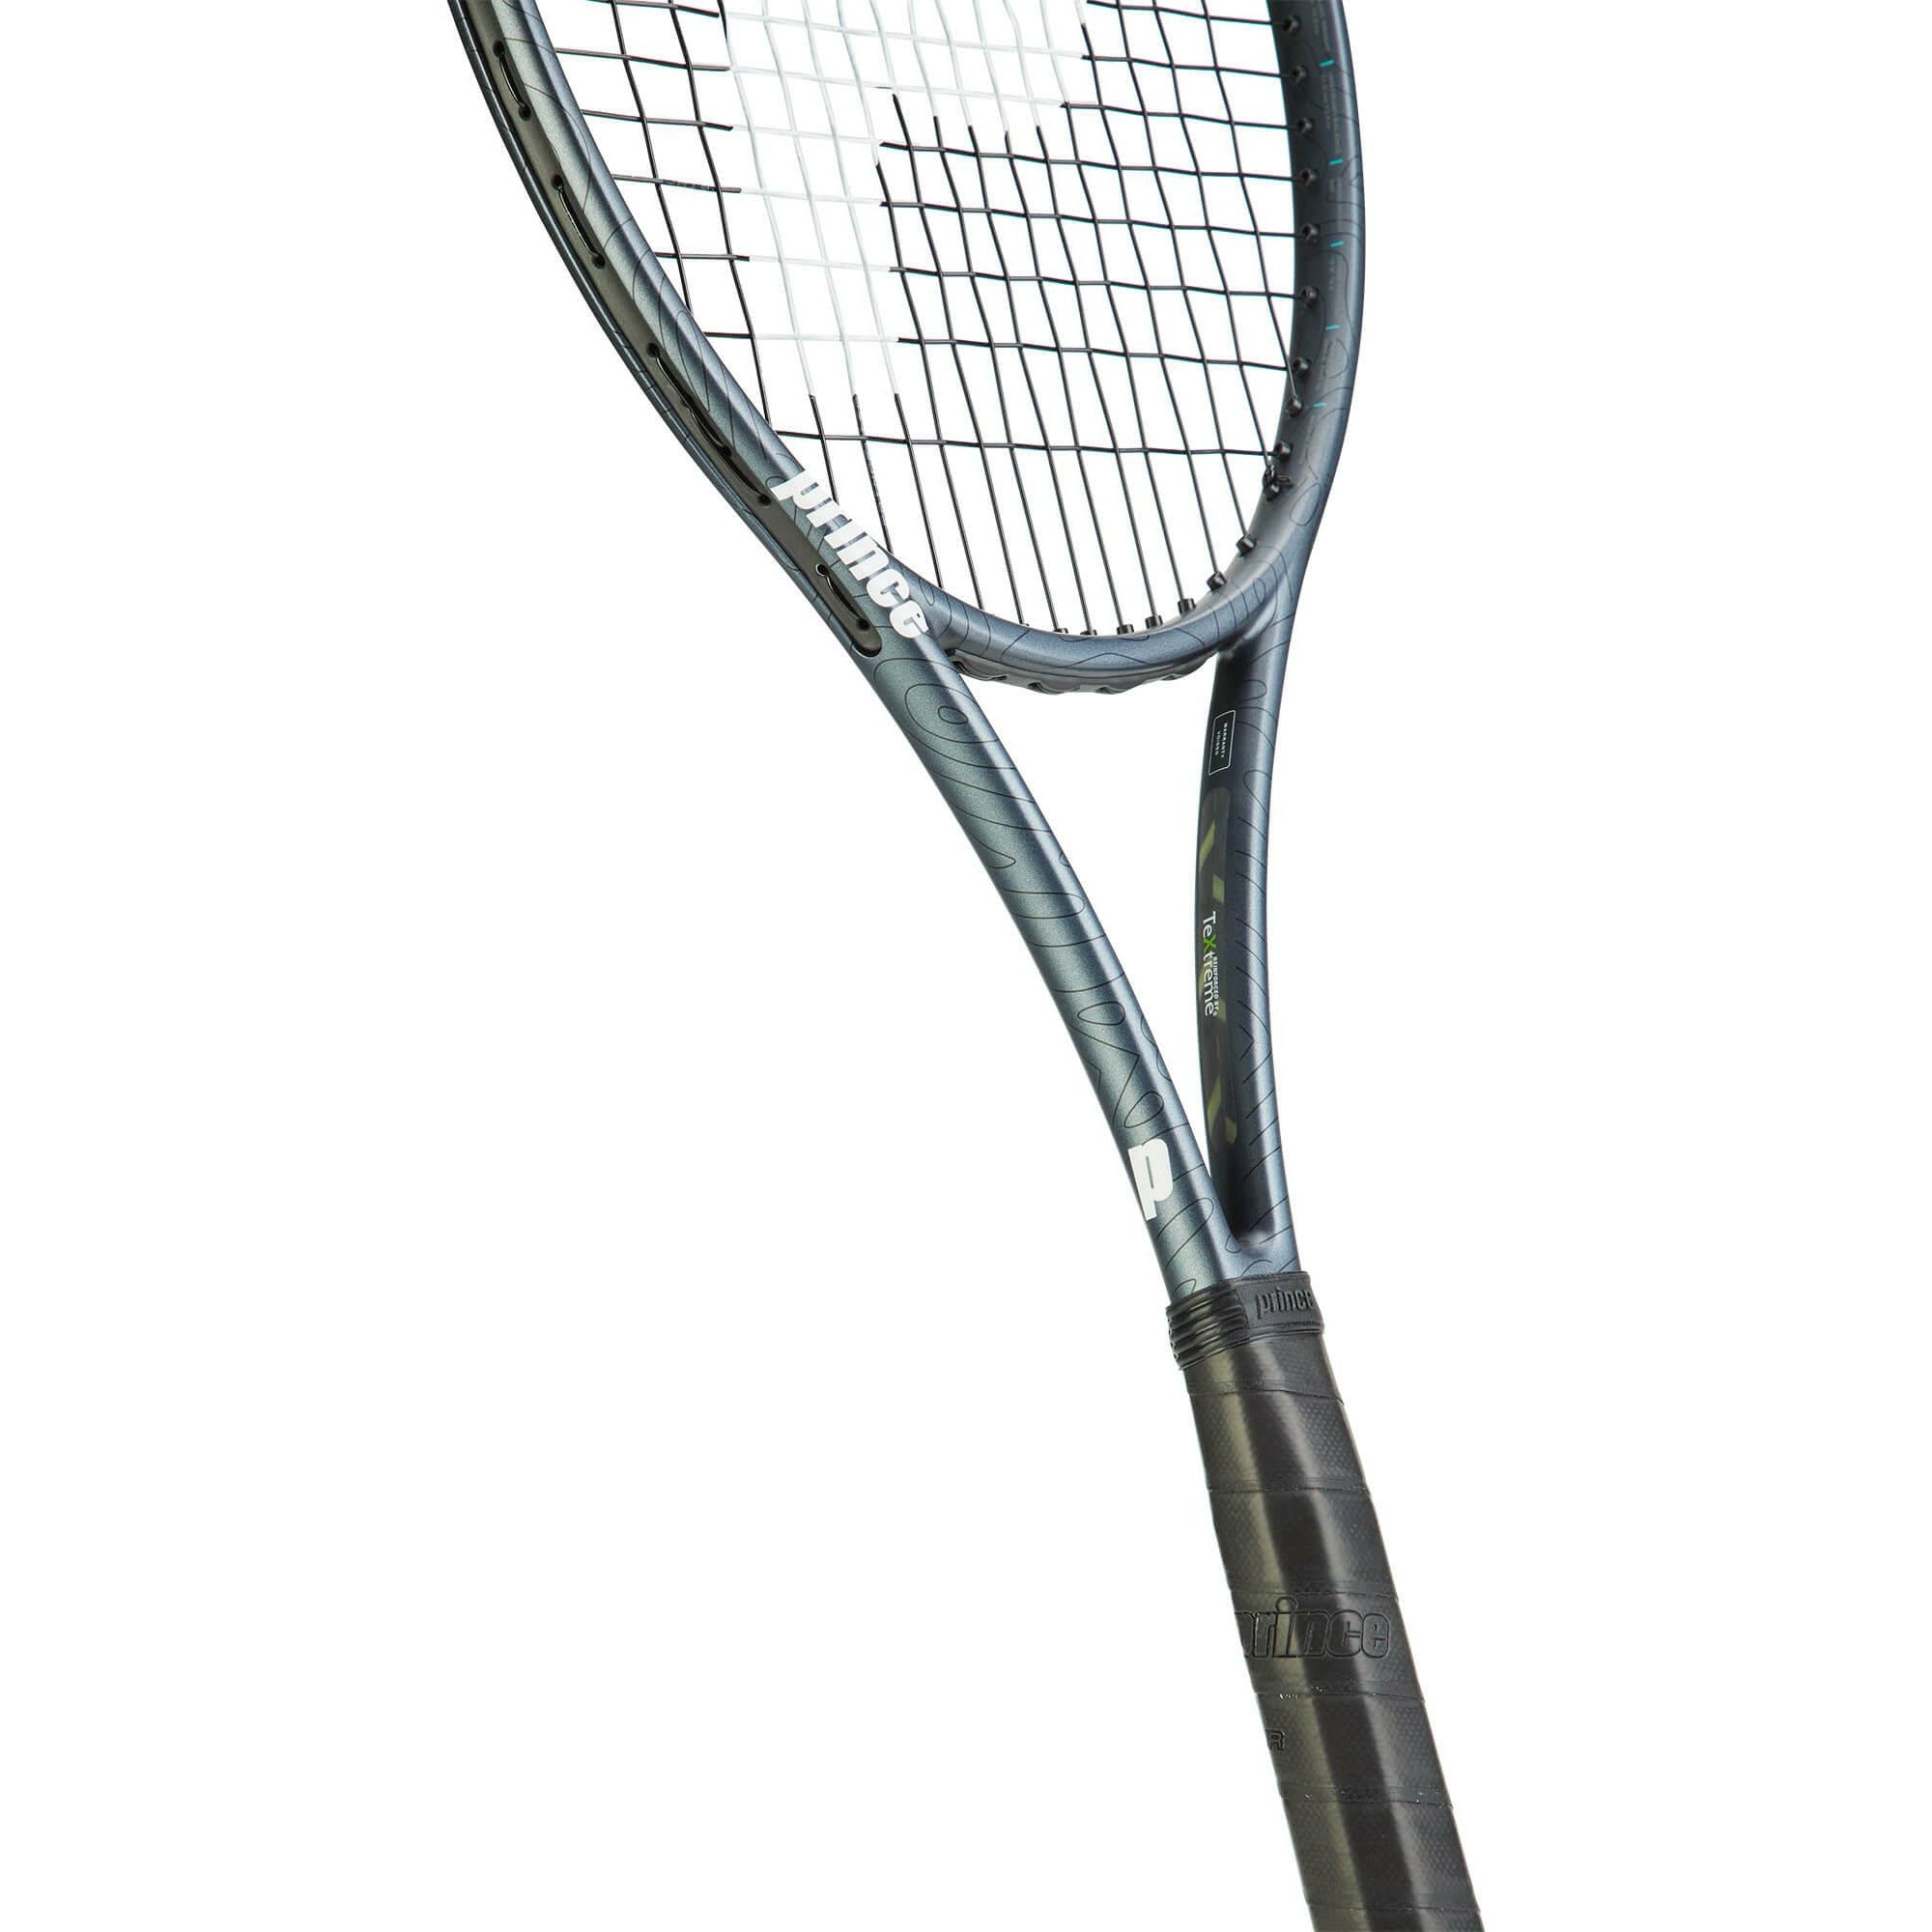 Prince Phantom 100X (290g) Tennis Racket [Frame Only]